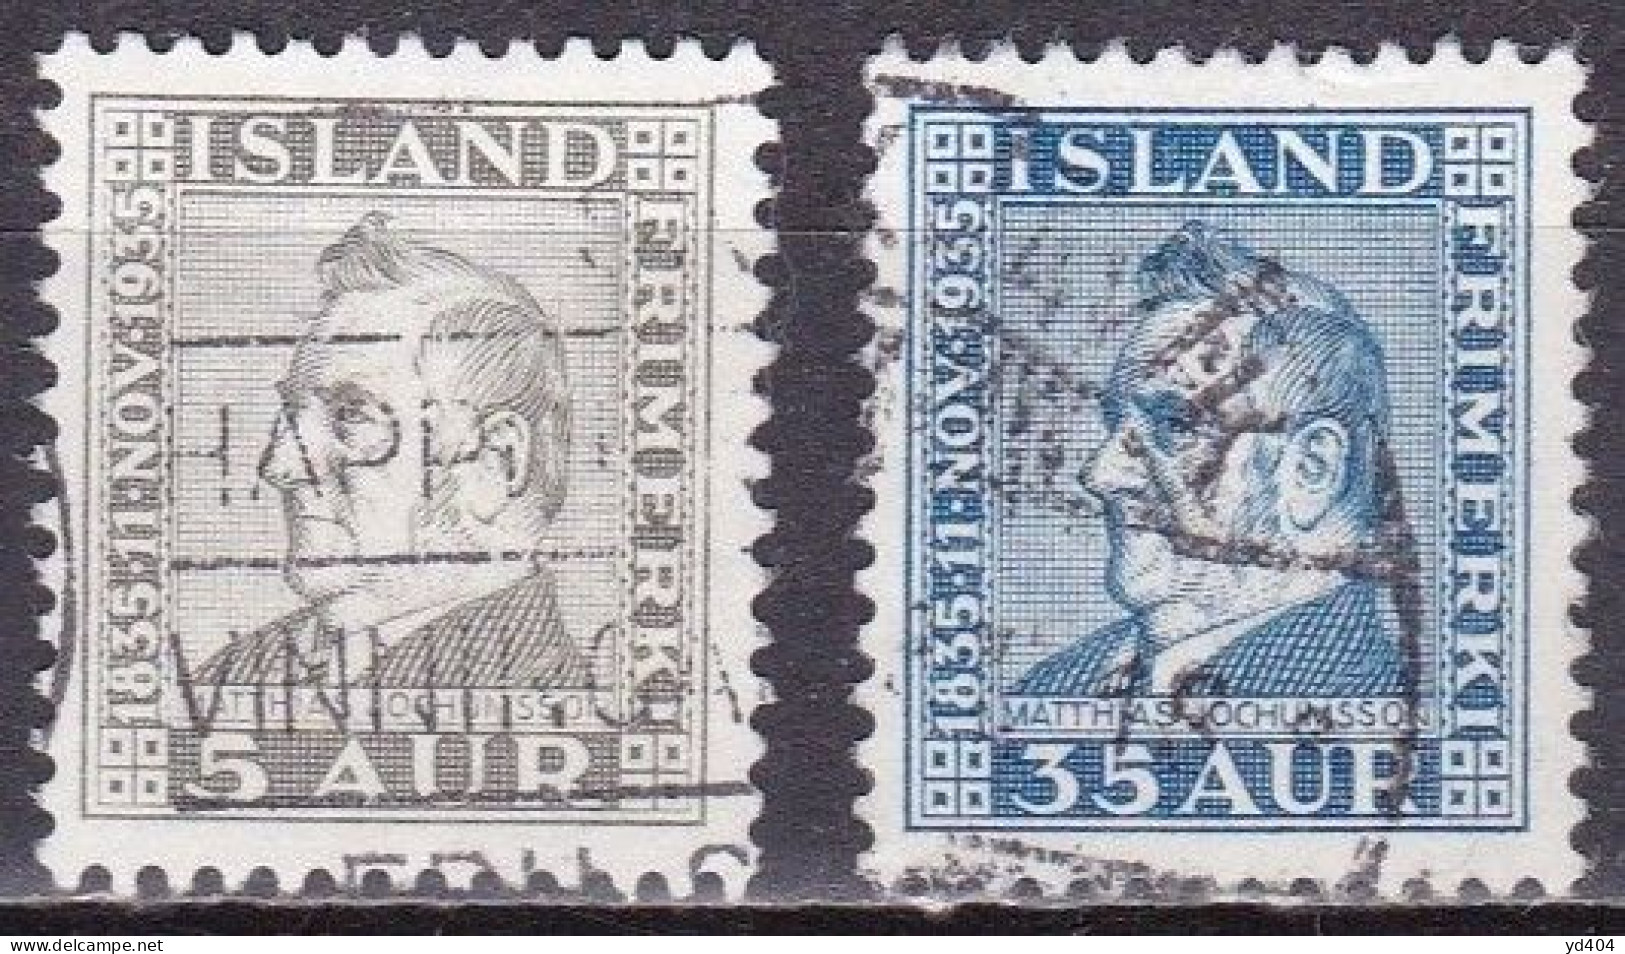 IS031B – ISLANDE – ICELAND – 1935 – MATHIAS JOCHUMSSON – SG # 217-219 USED - Gebruikt